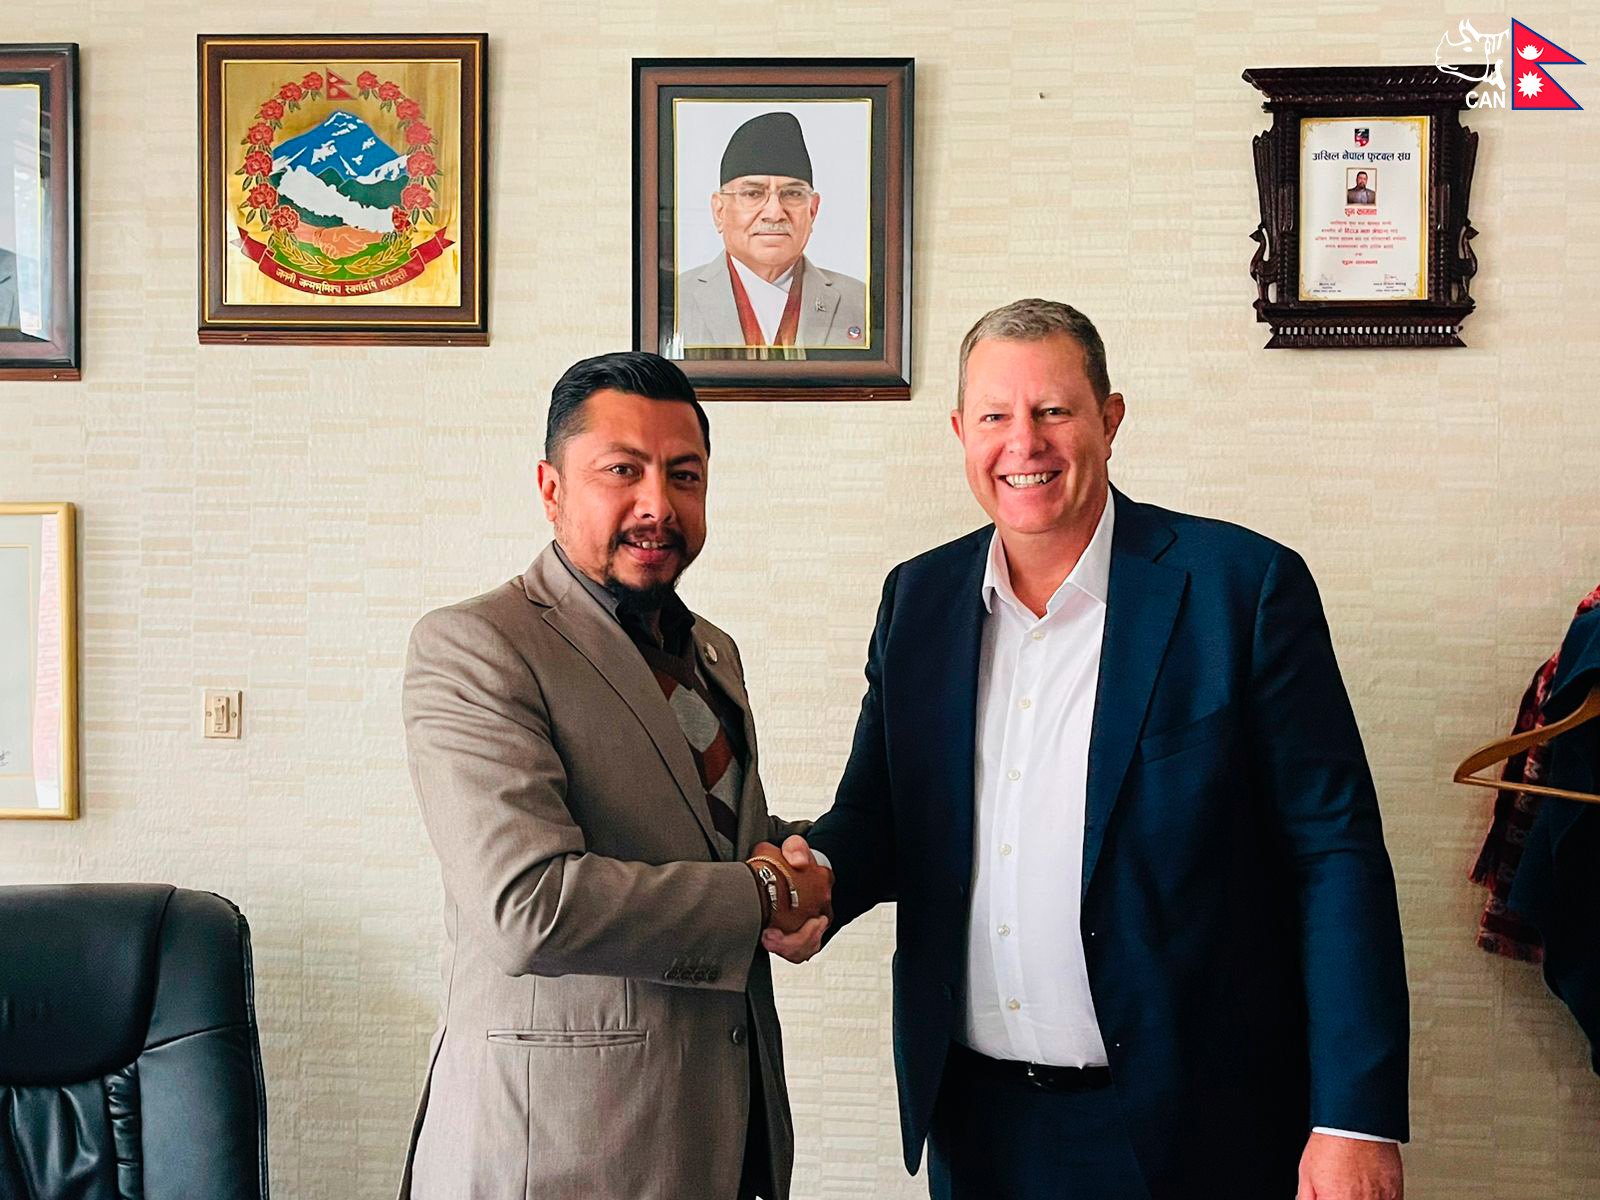 ICC President Greg Barclay meets Sports Minister Shrestha